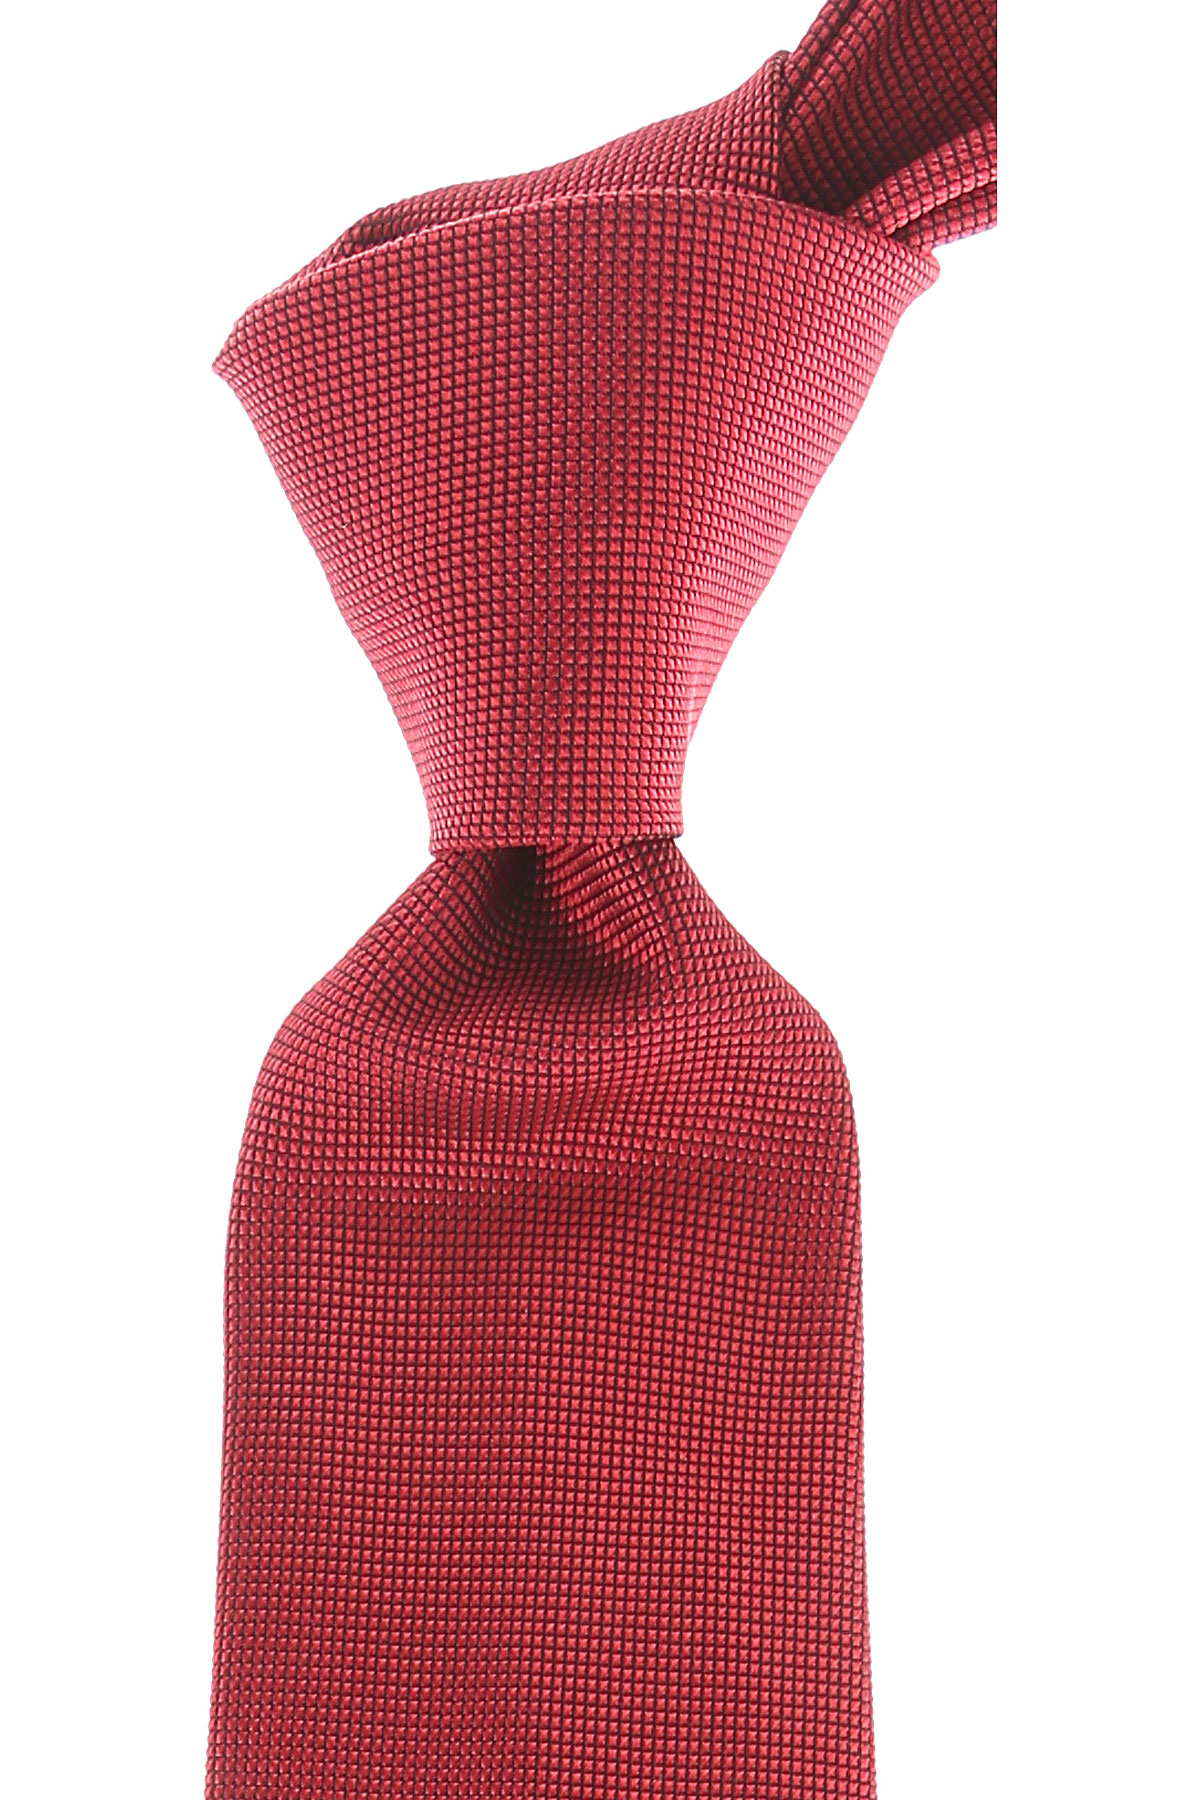 Cravates Kenzo , Rouge feu, Soie, 2017